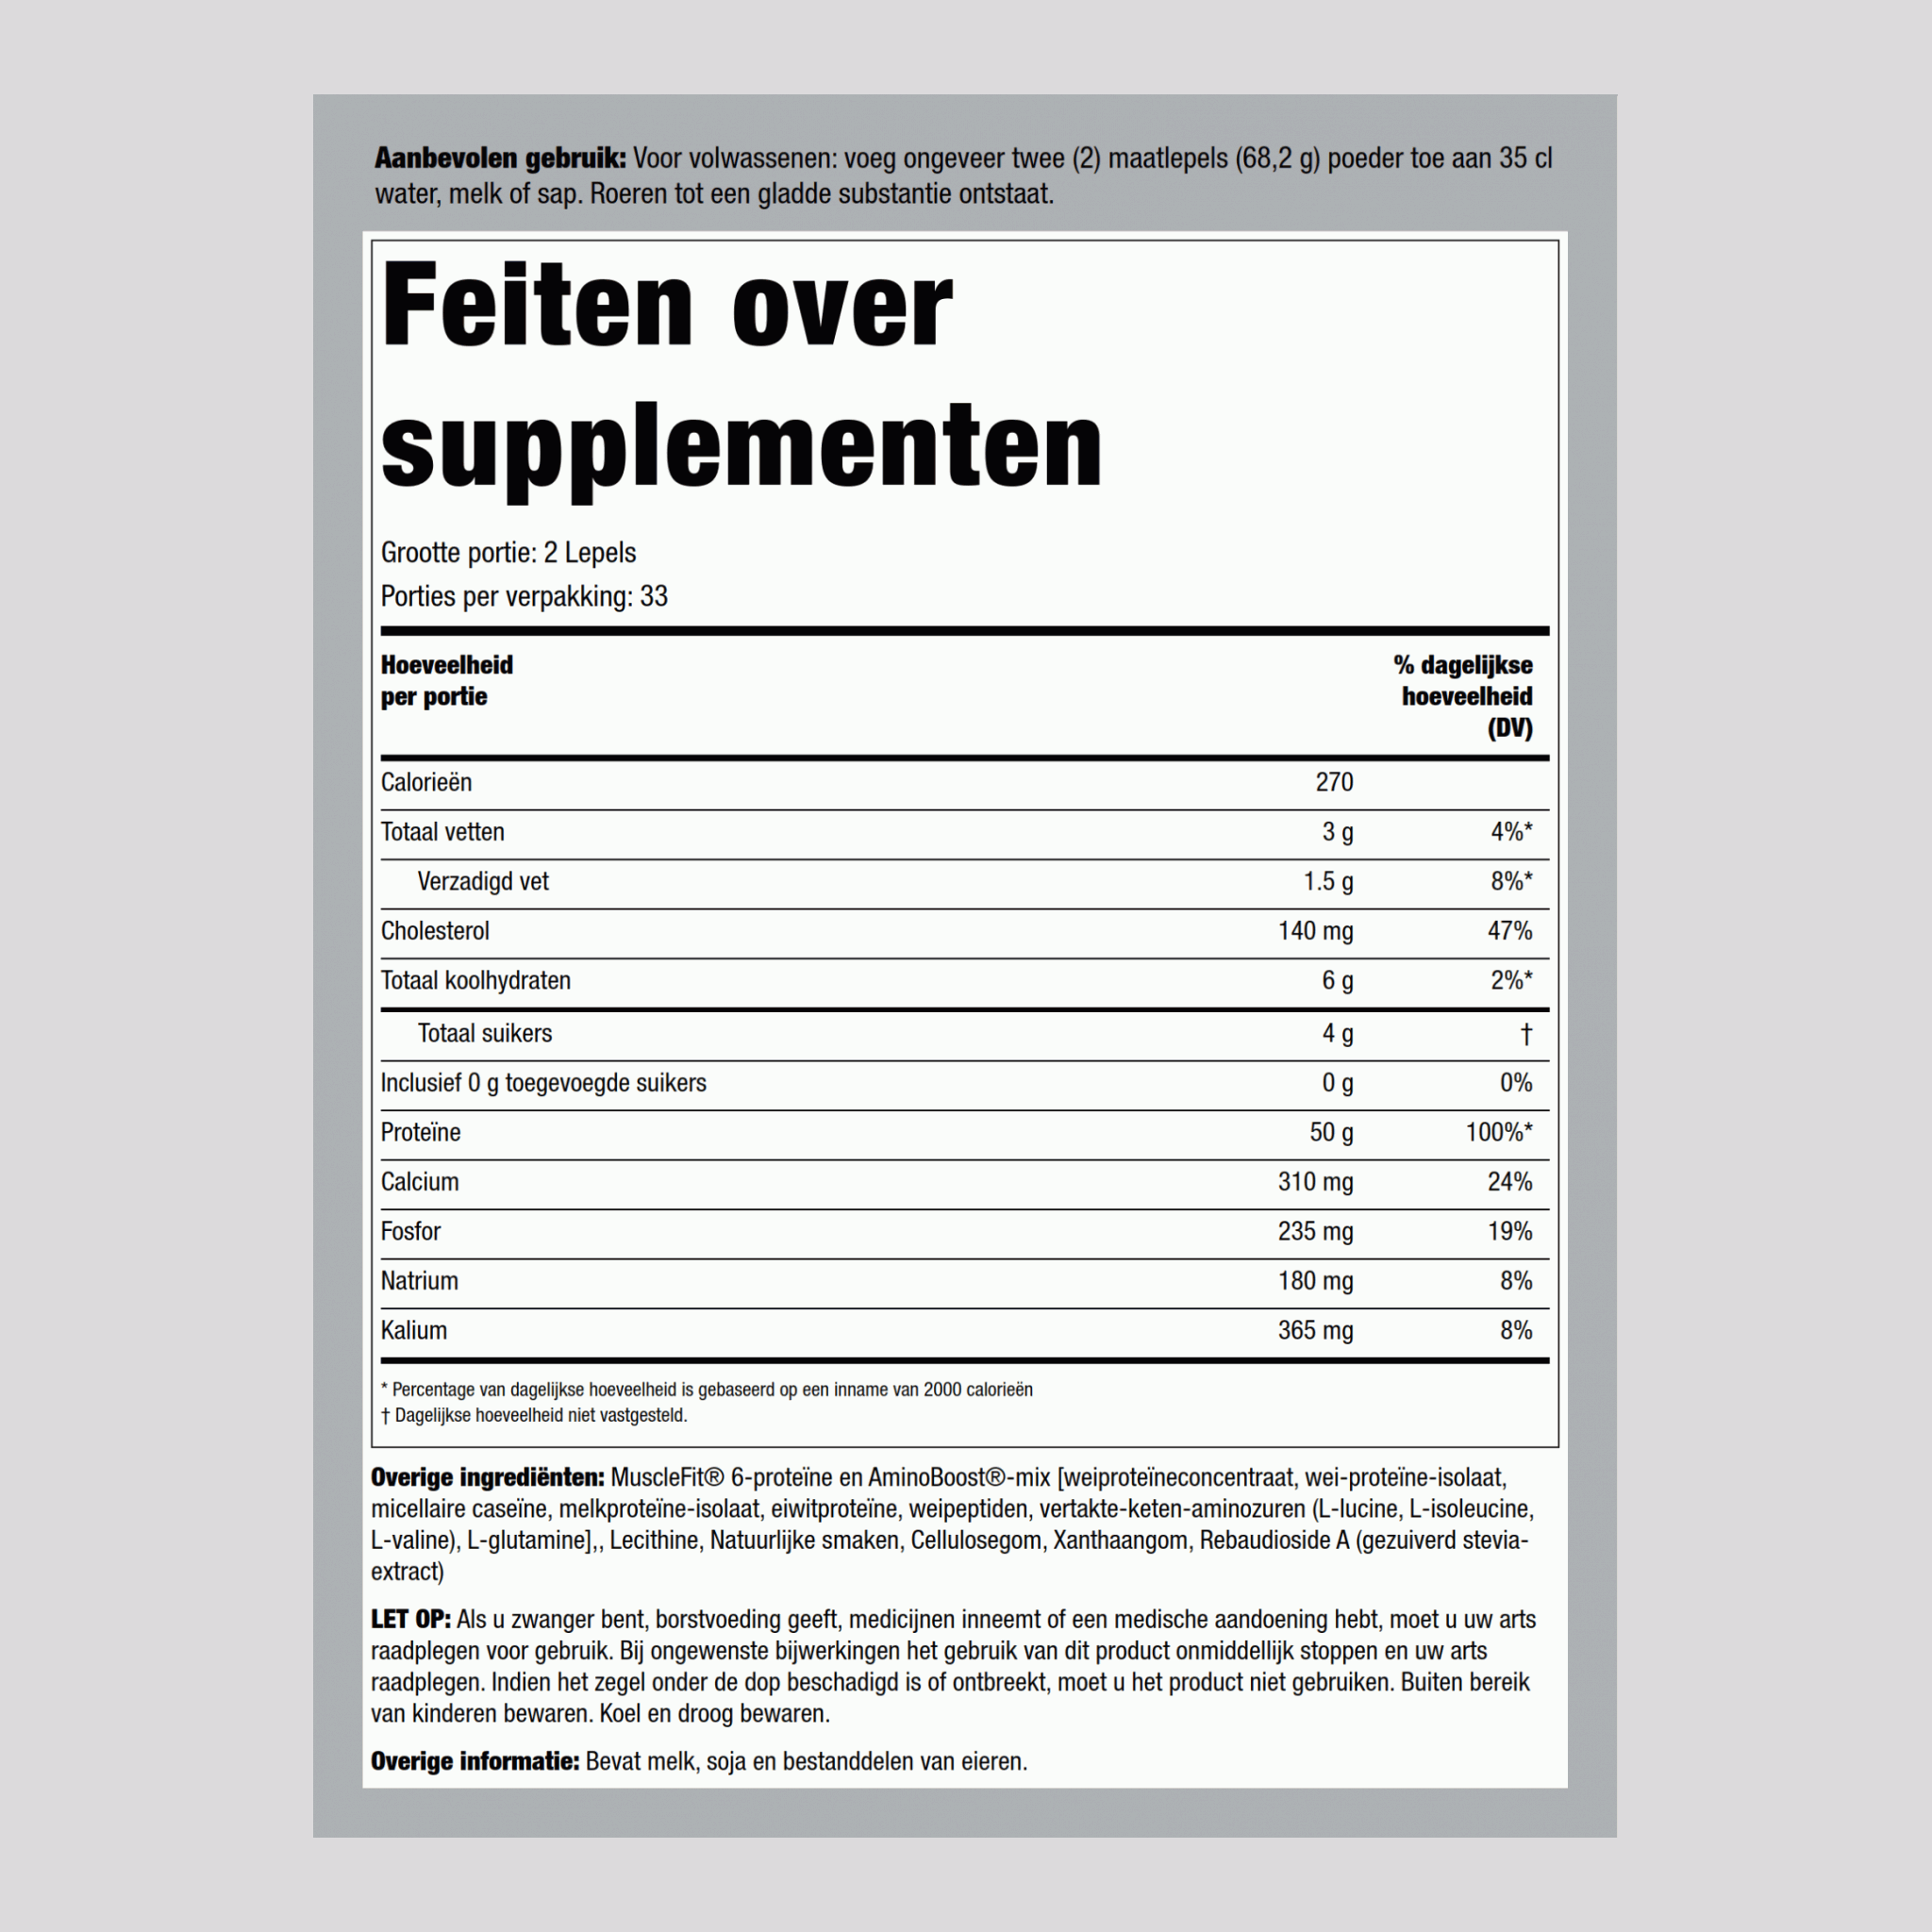 MuscleFIt proteïne (natuurlijke vanille) 5 pond 2.268 kg Fles    